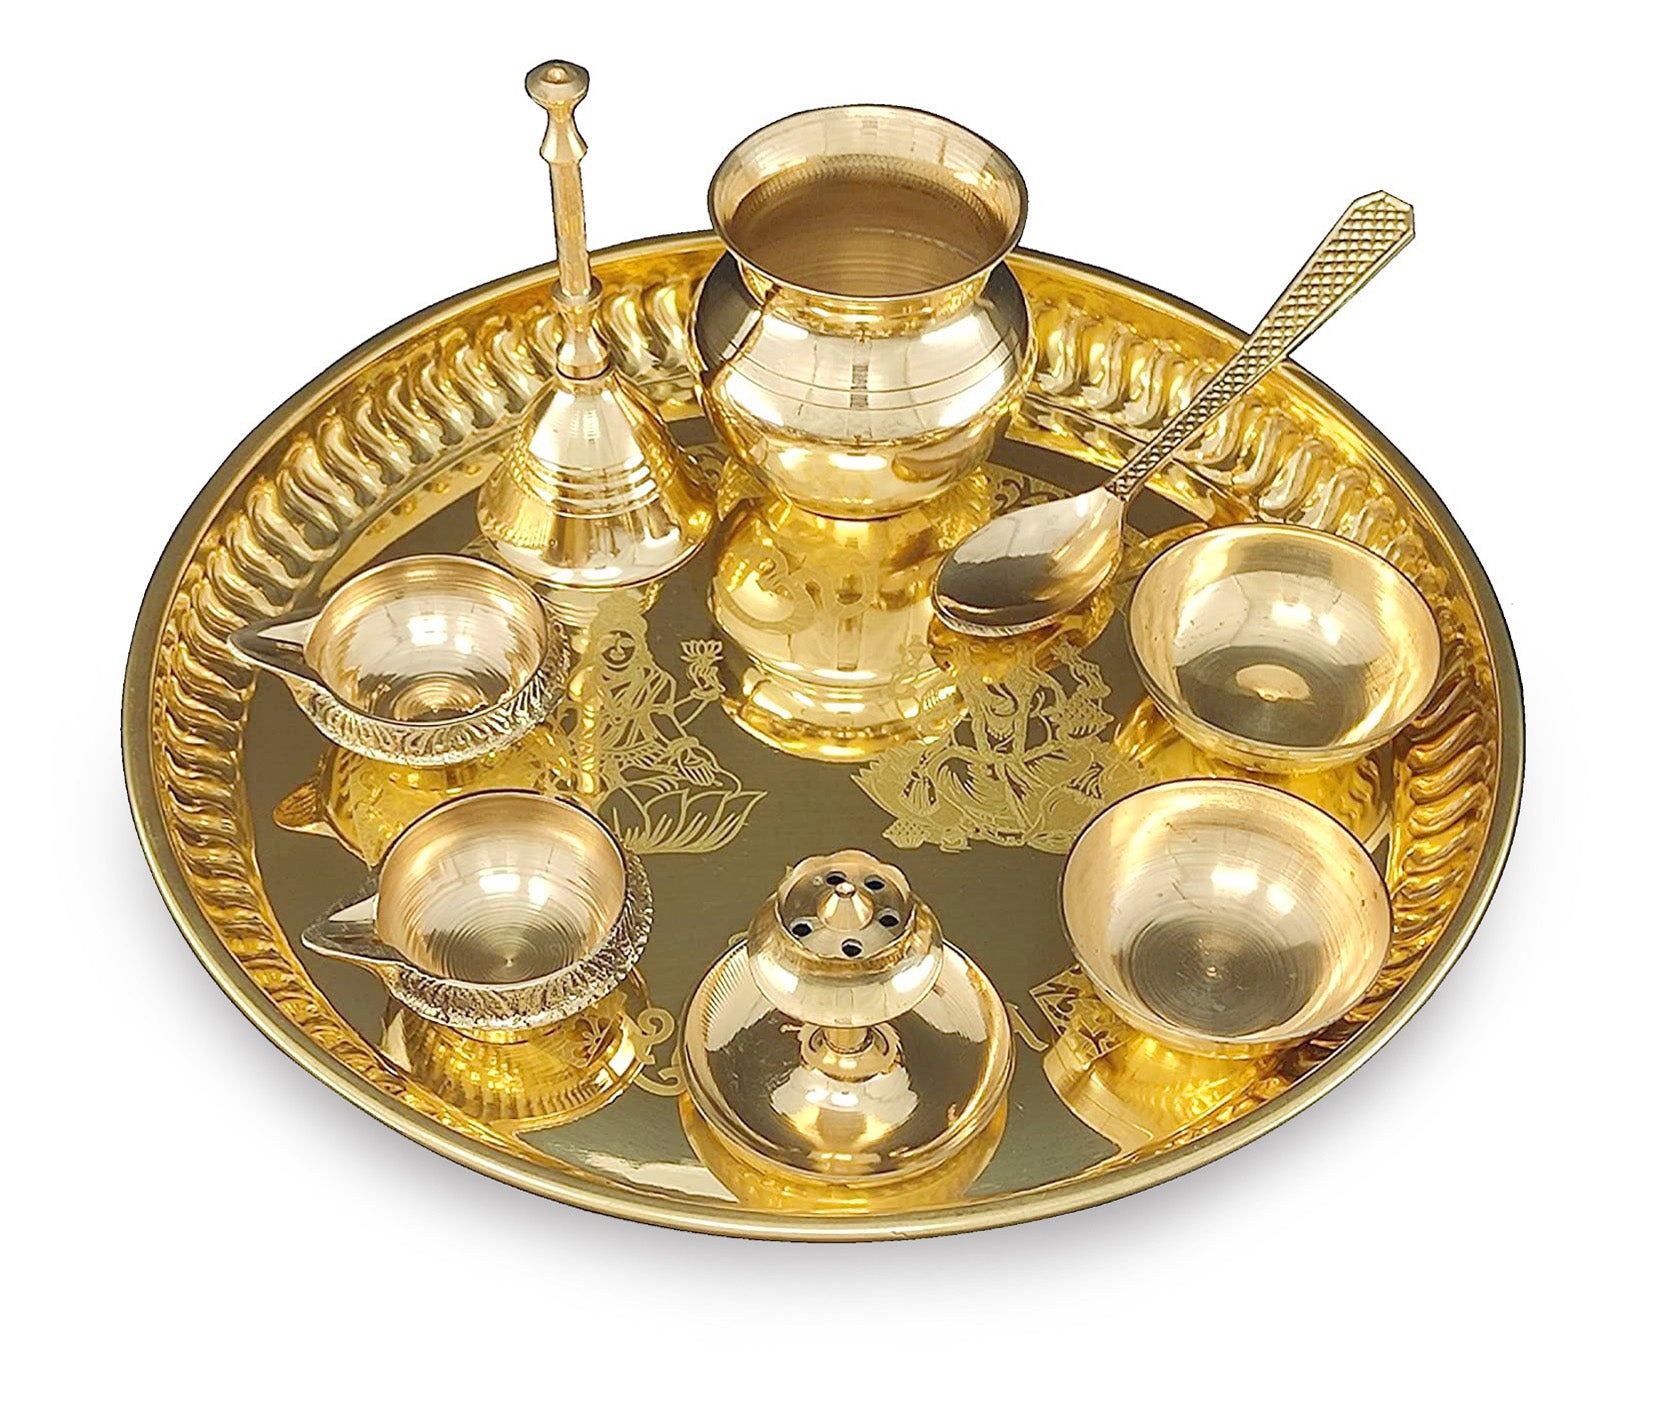 Bengalen Brass Pooja thali 8 Inch with Accessories Ganesh Lakshmi Design Puja Set Wedding Return Gift Items